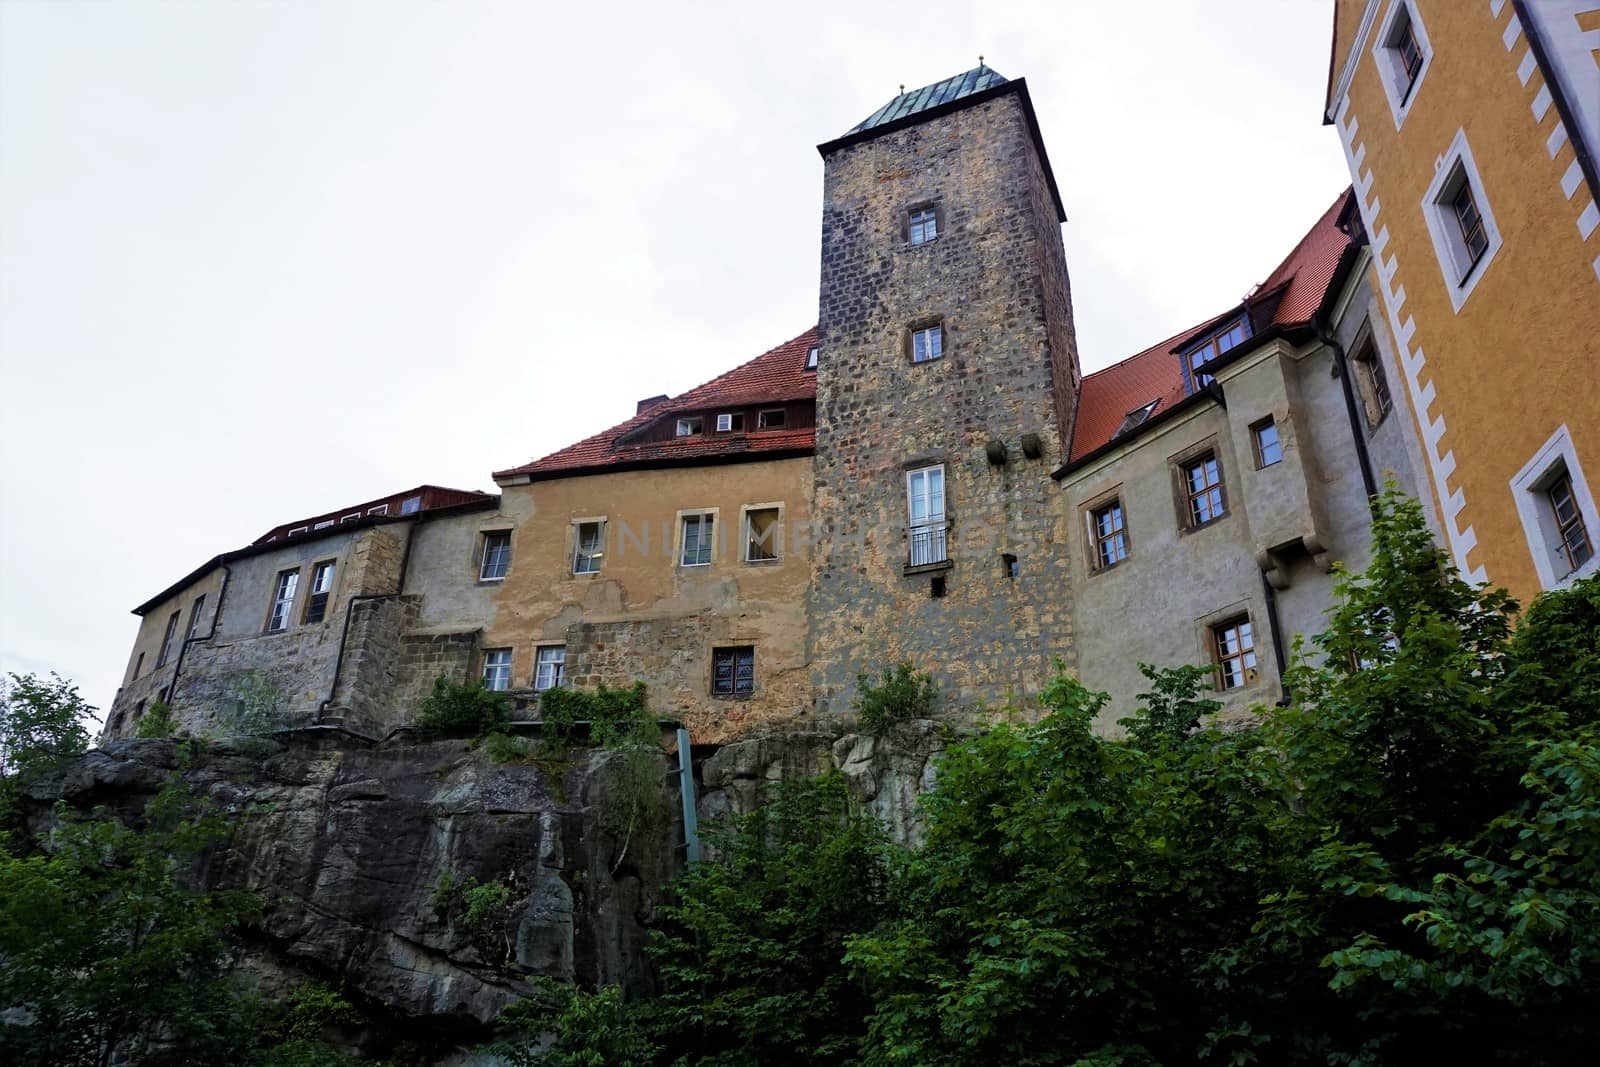 Hohnstein in Saxon Switzerland offers a popular castle built on sandstone rocks